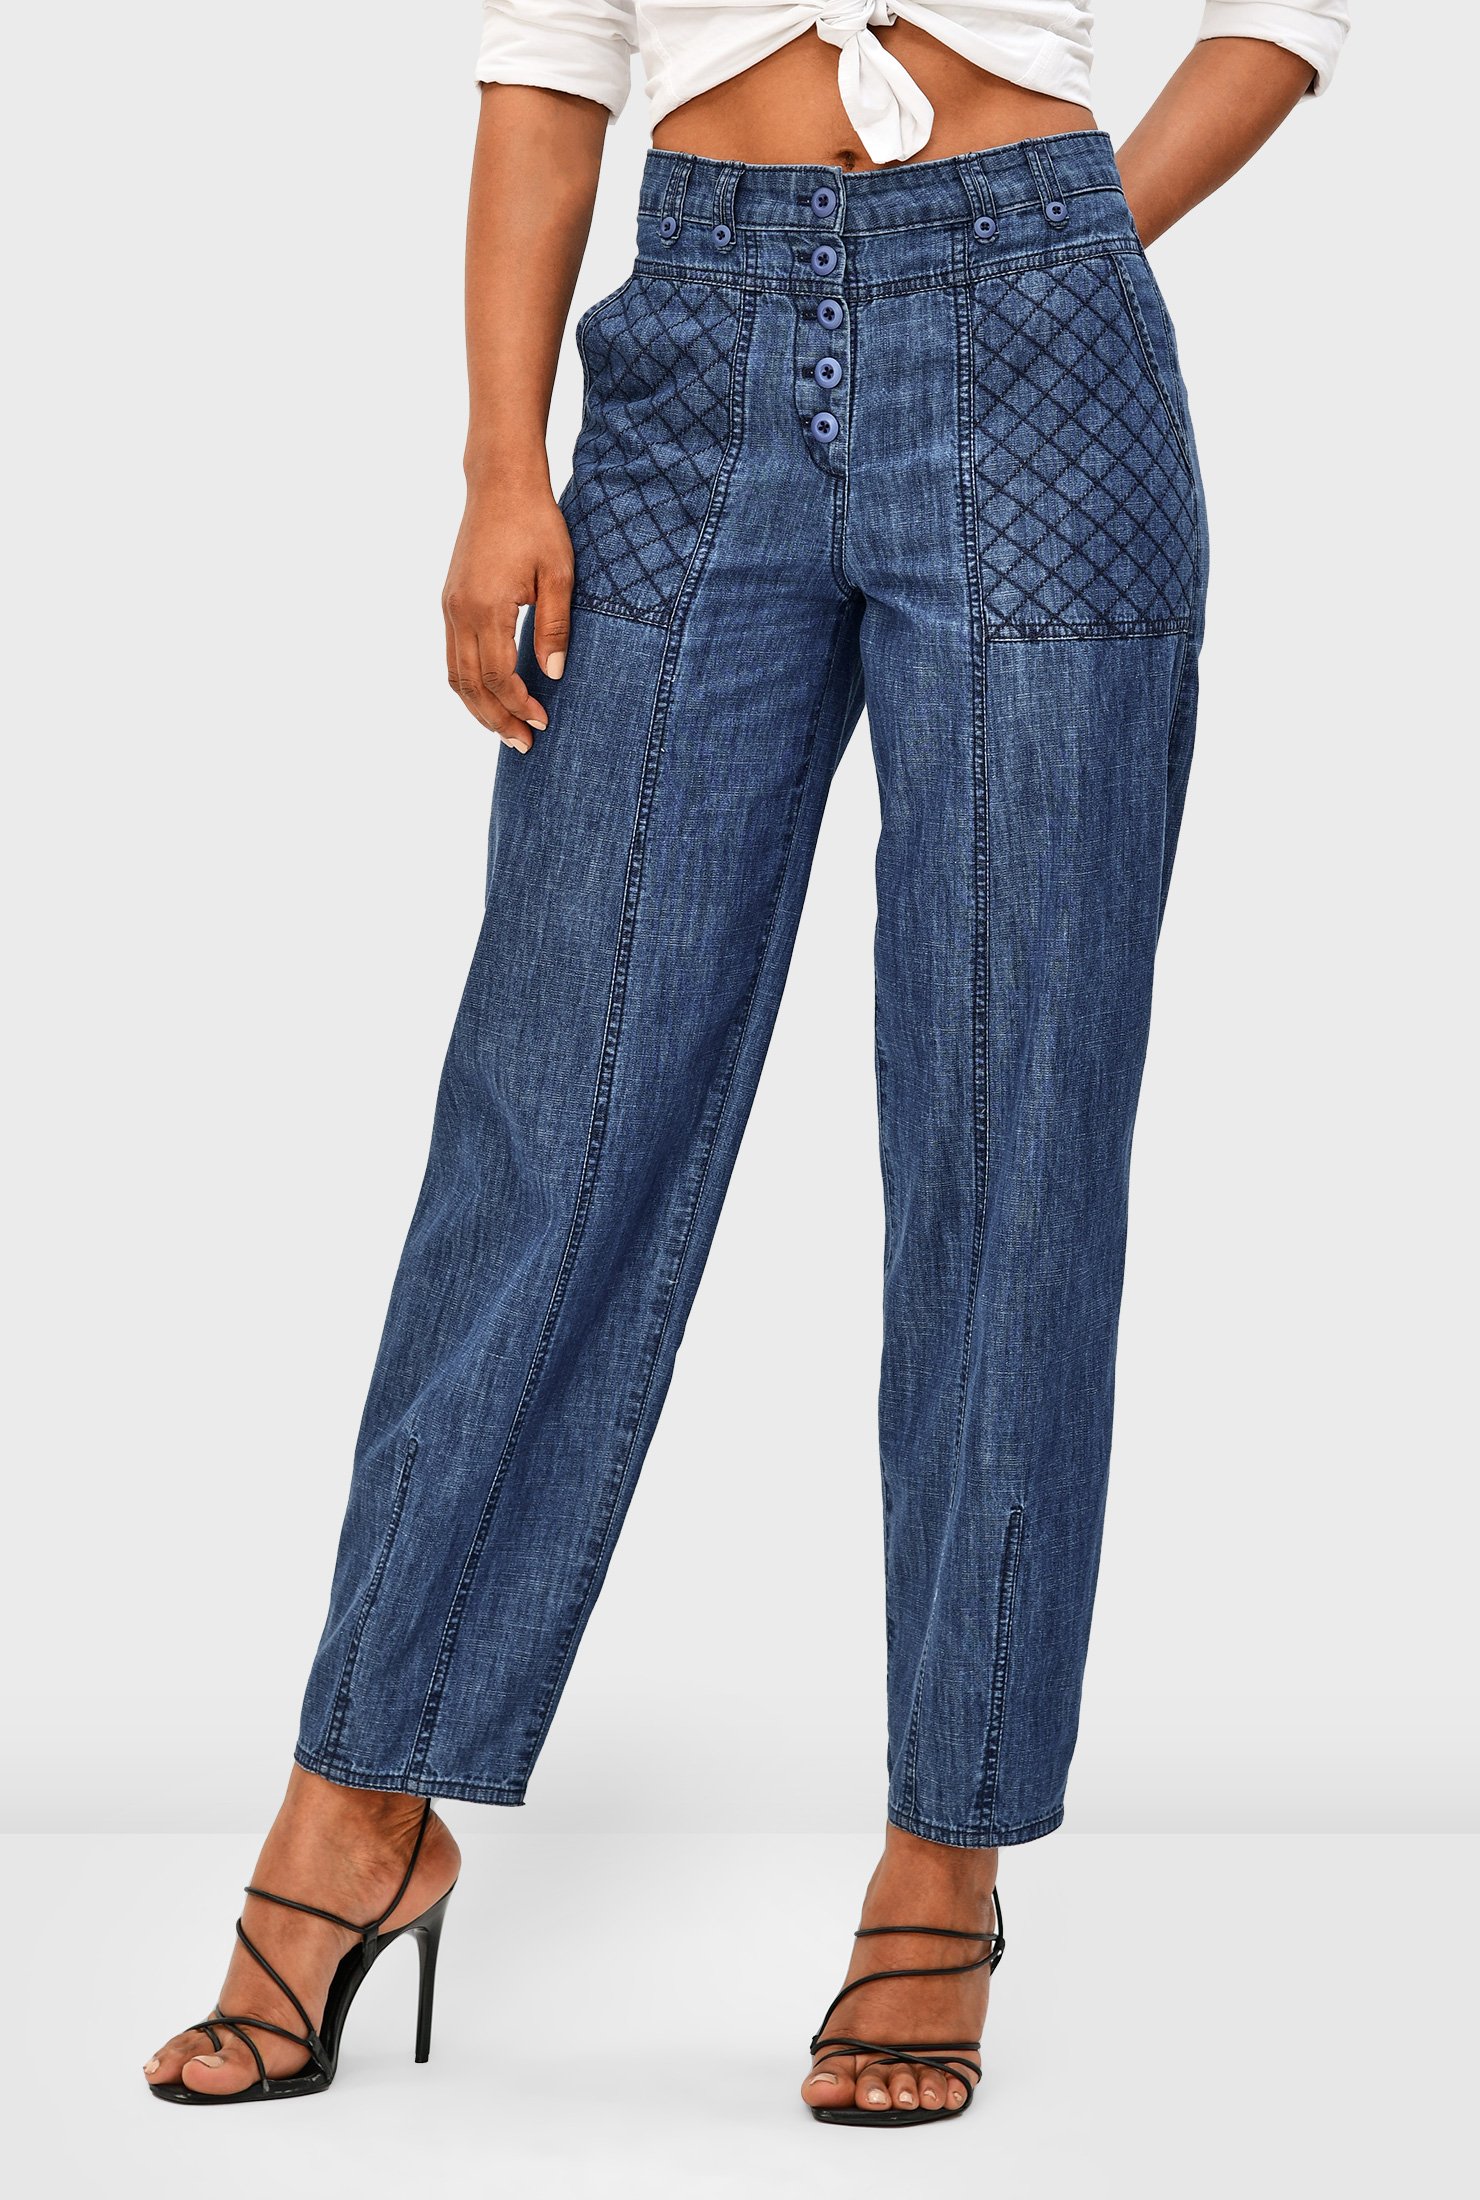 Shop Button fly high waist cotton denim jeans | eShakti